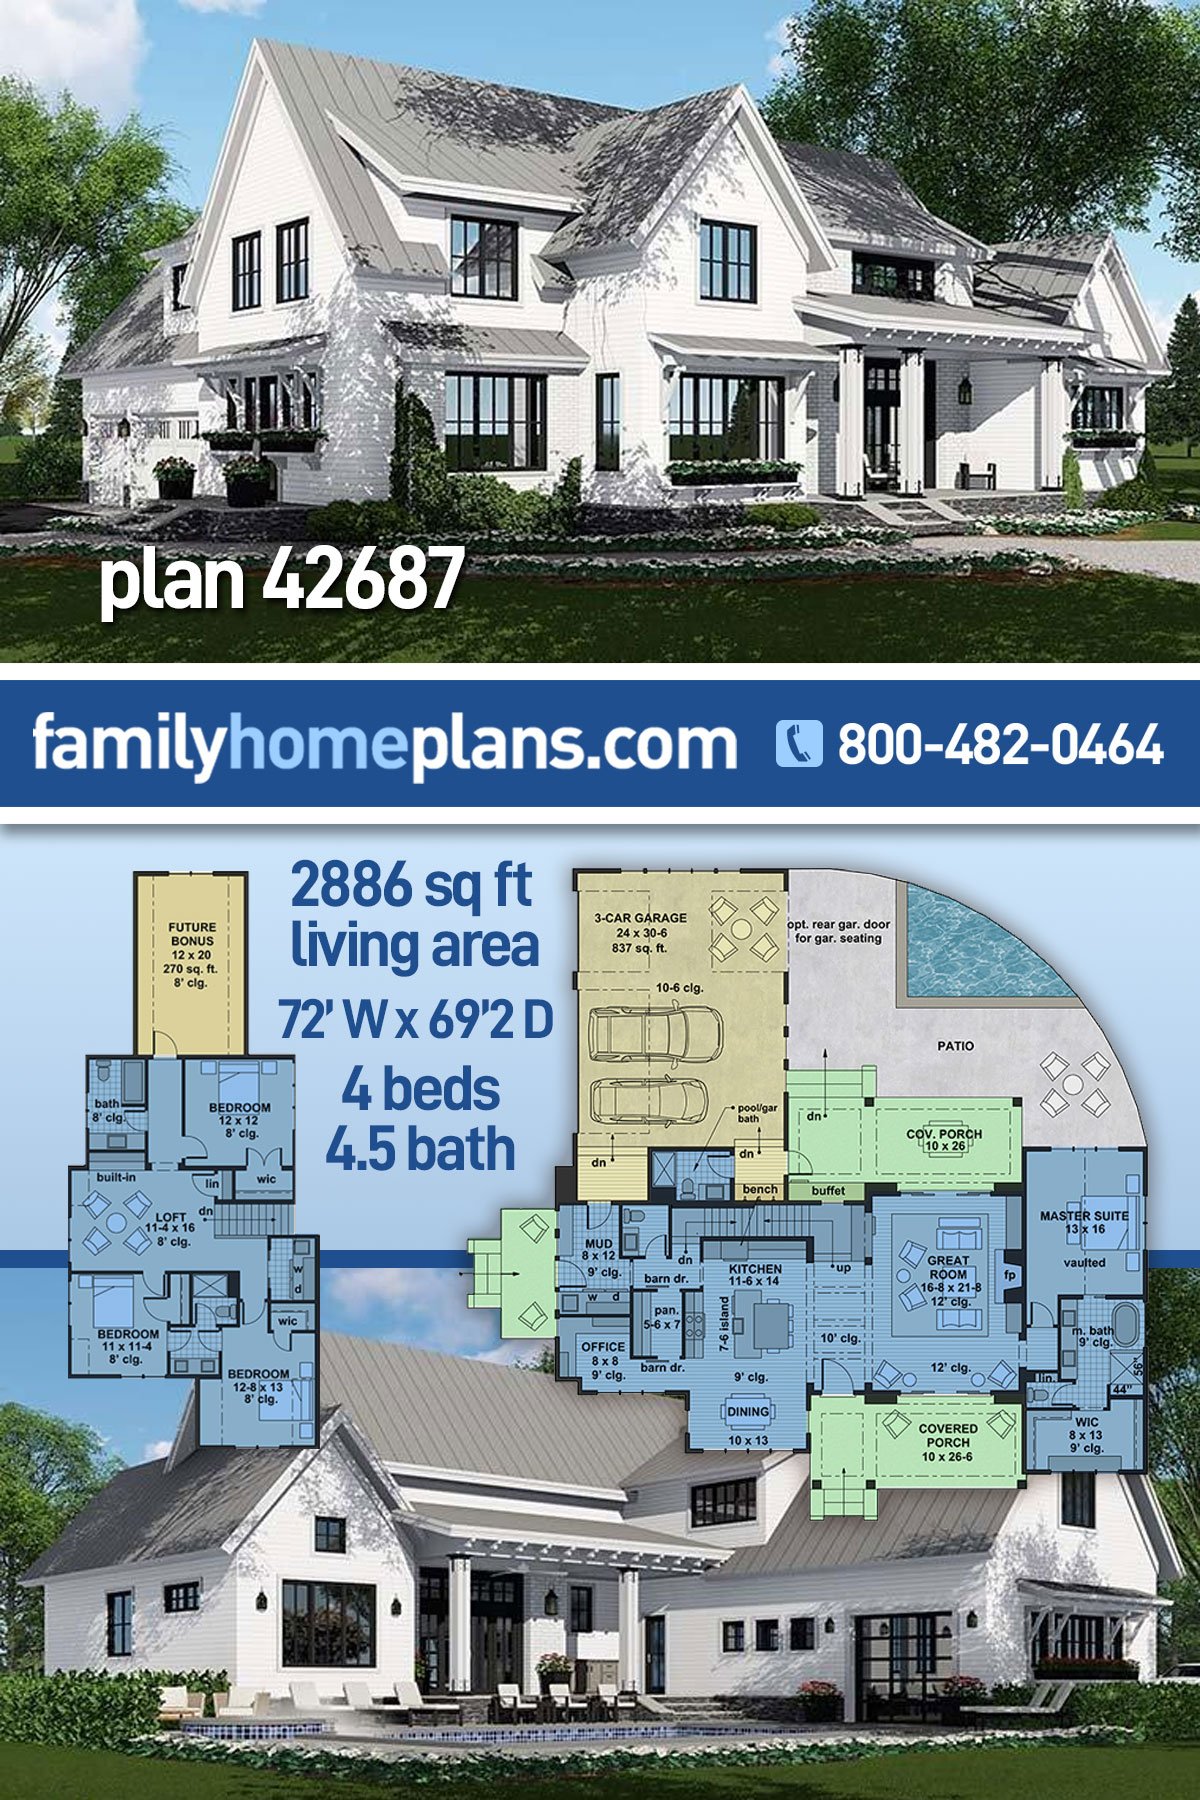 House Plan 42687